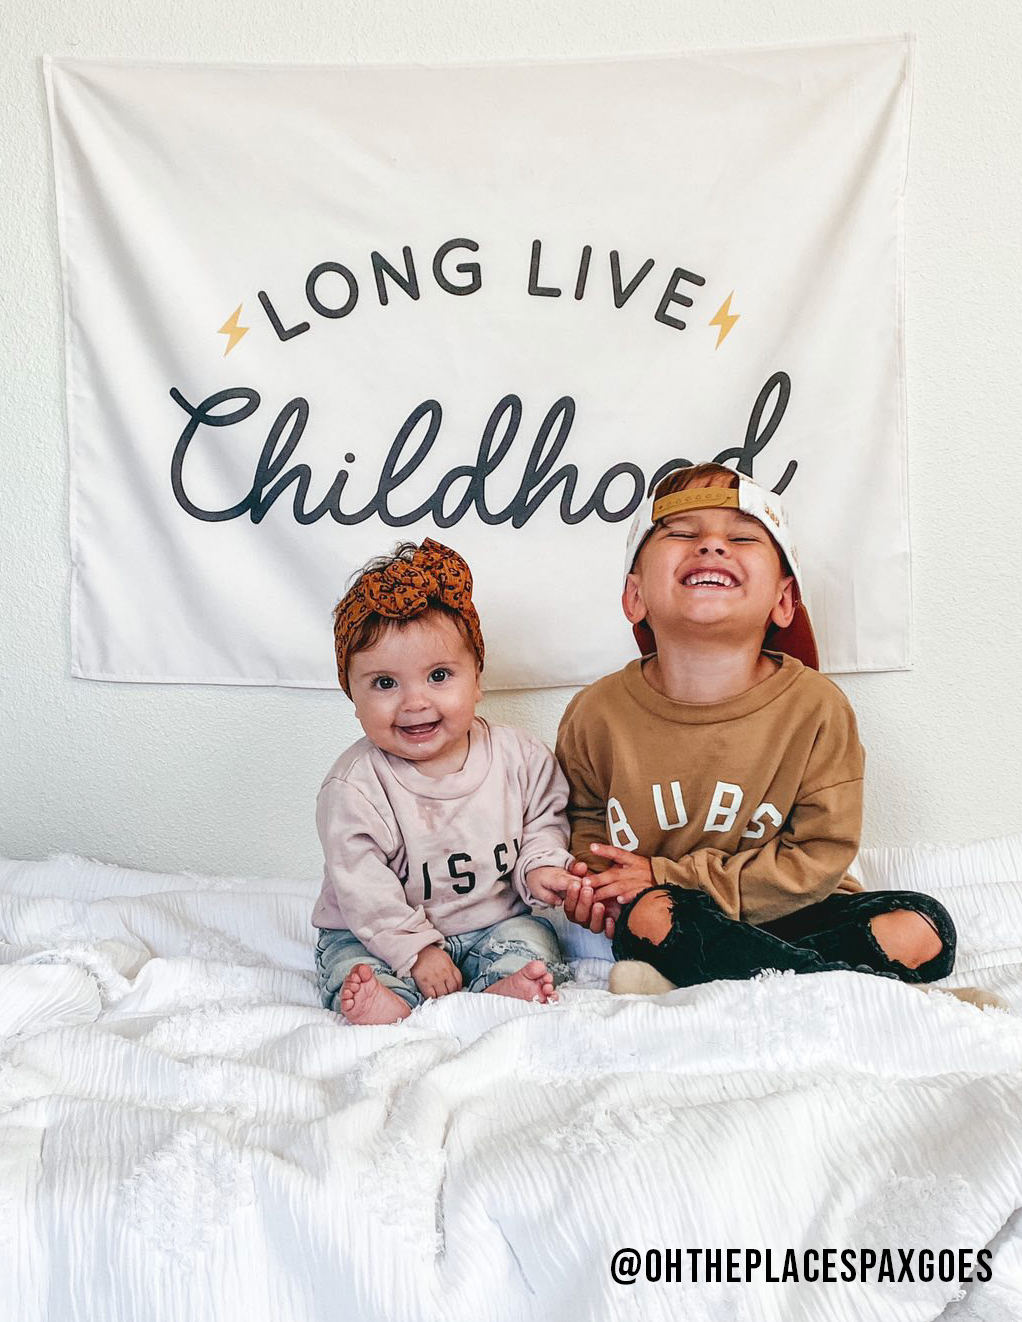 Long Live Childhood Banner (Neutral)